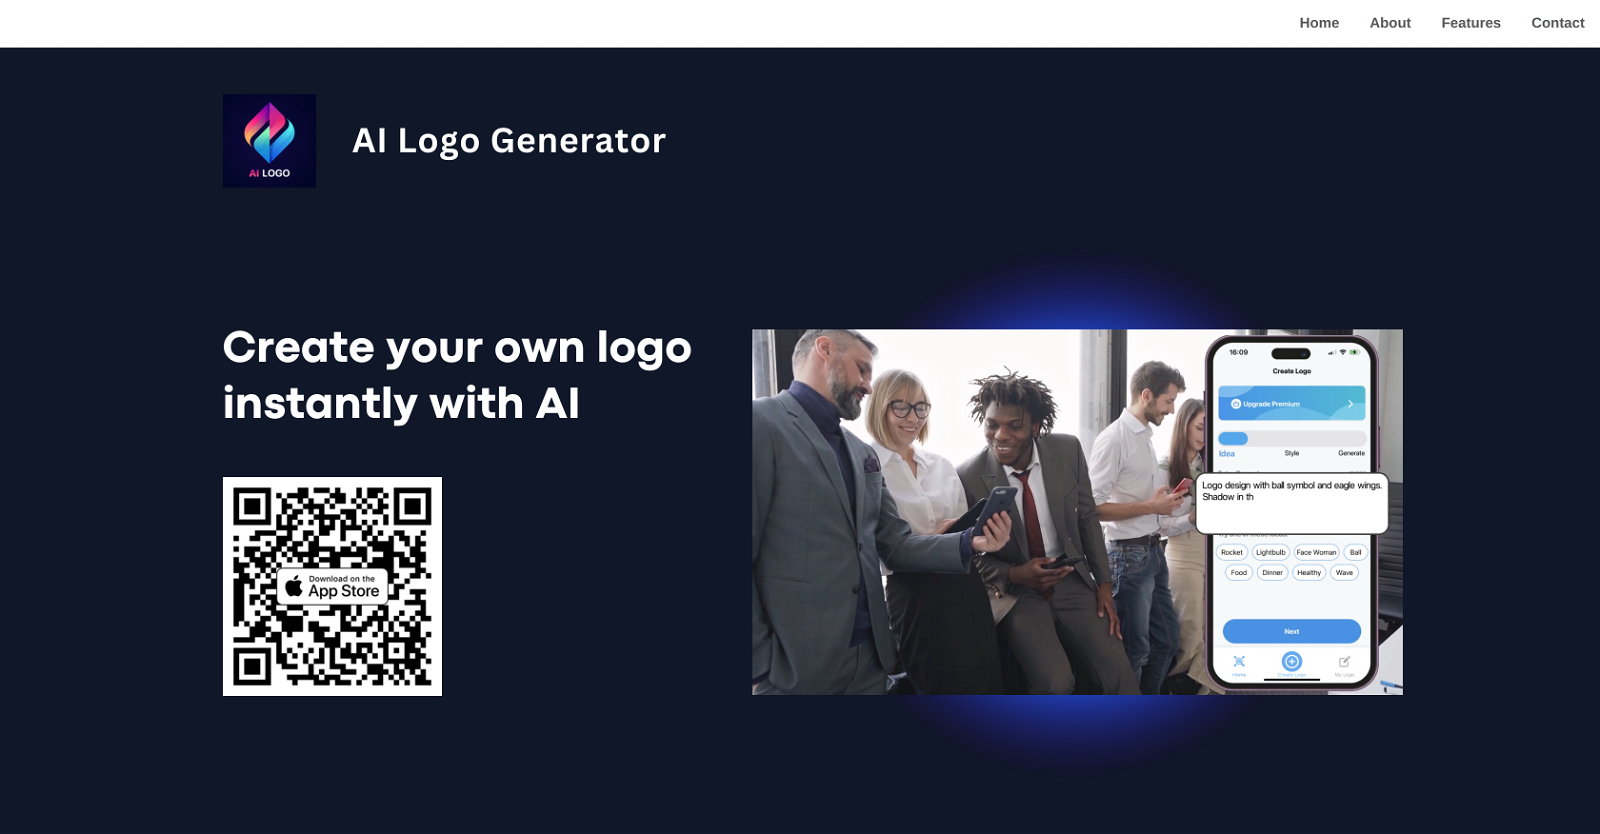 AppIntro's AI Logo Generator website